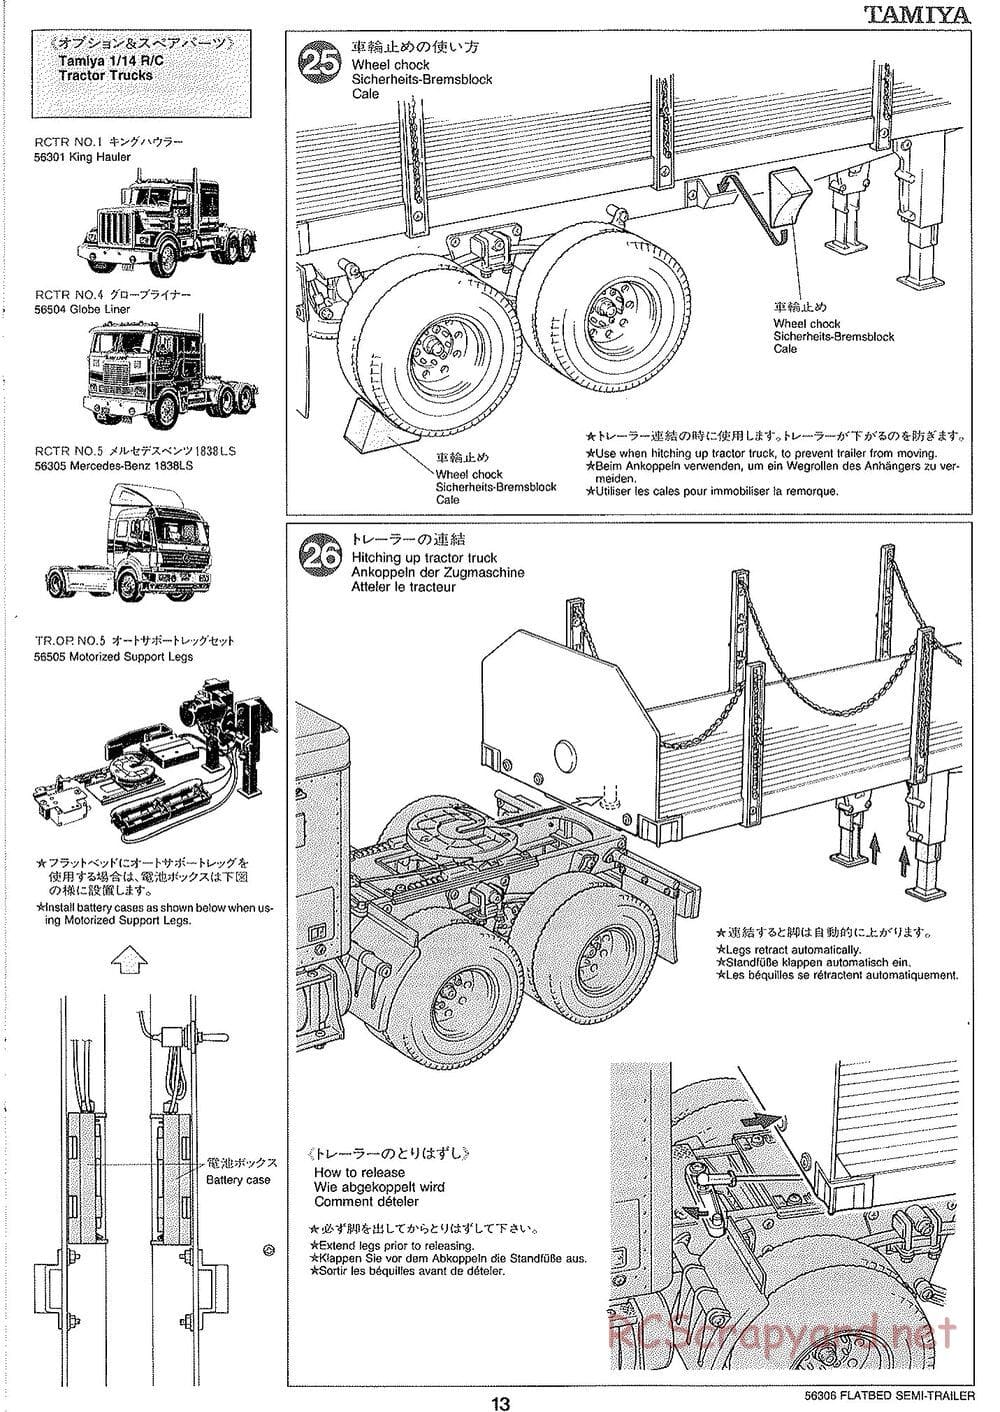 Tamiya - Semi Flatbed Trailer Chassis - Manual - Page 13